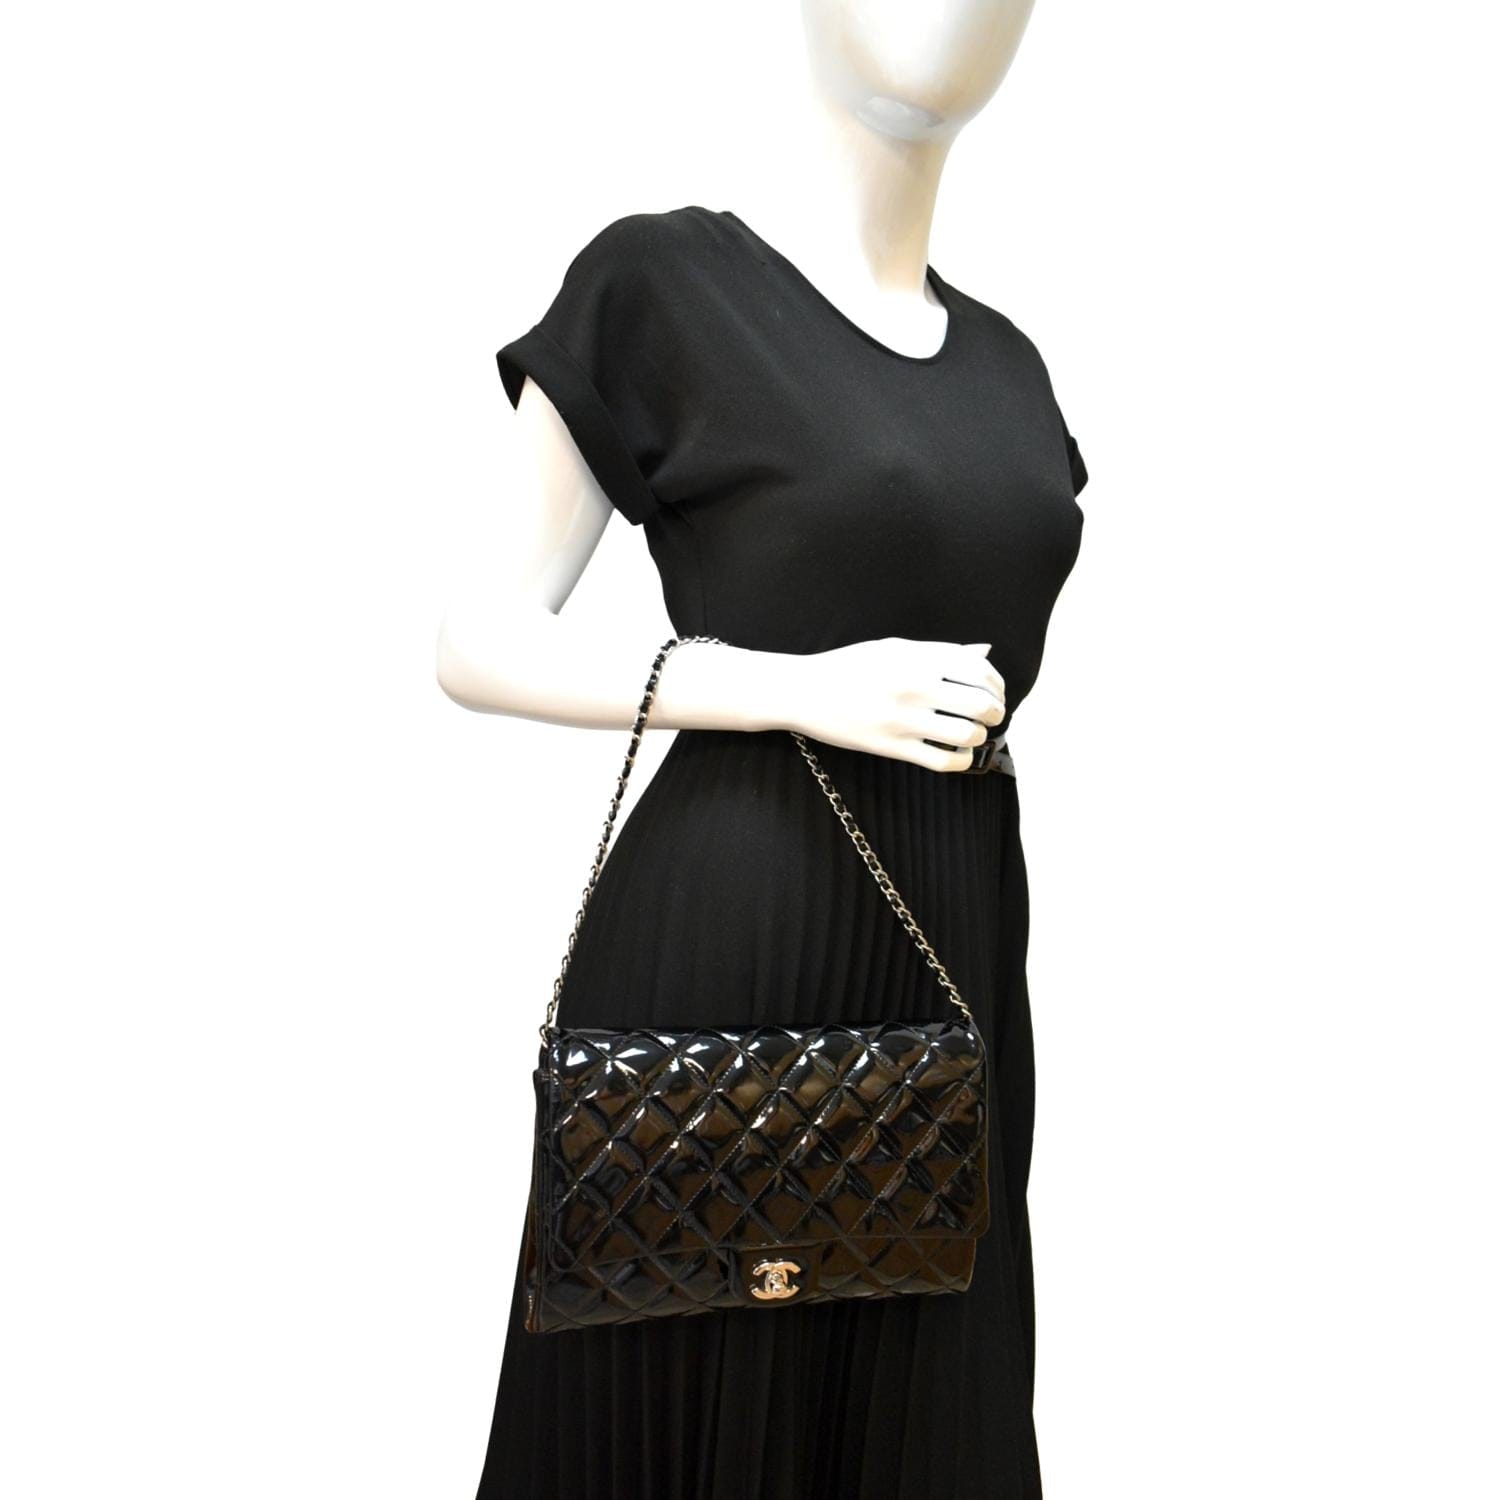 Chanel Timeless/Classique Black Leather Shoulder Bag (Pre-Owned)